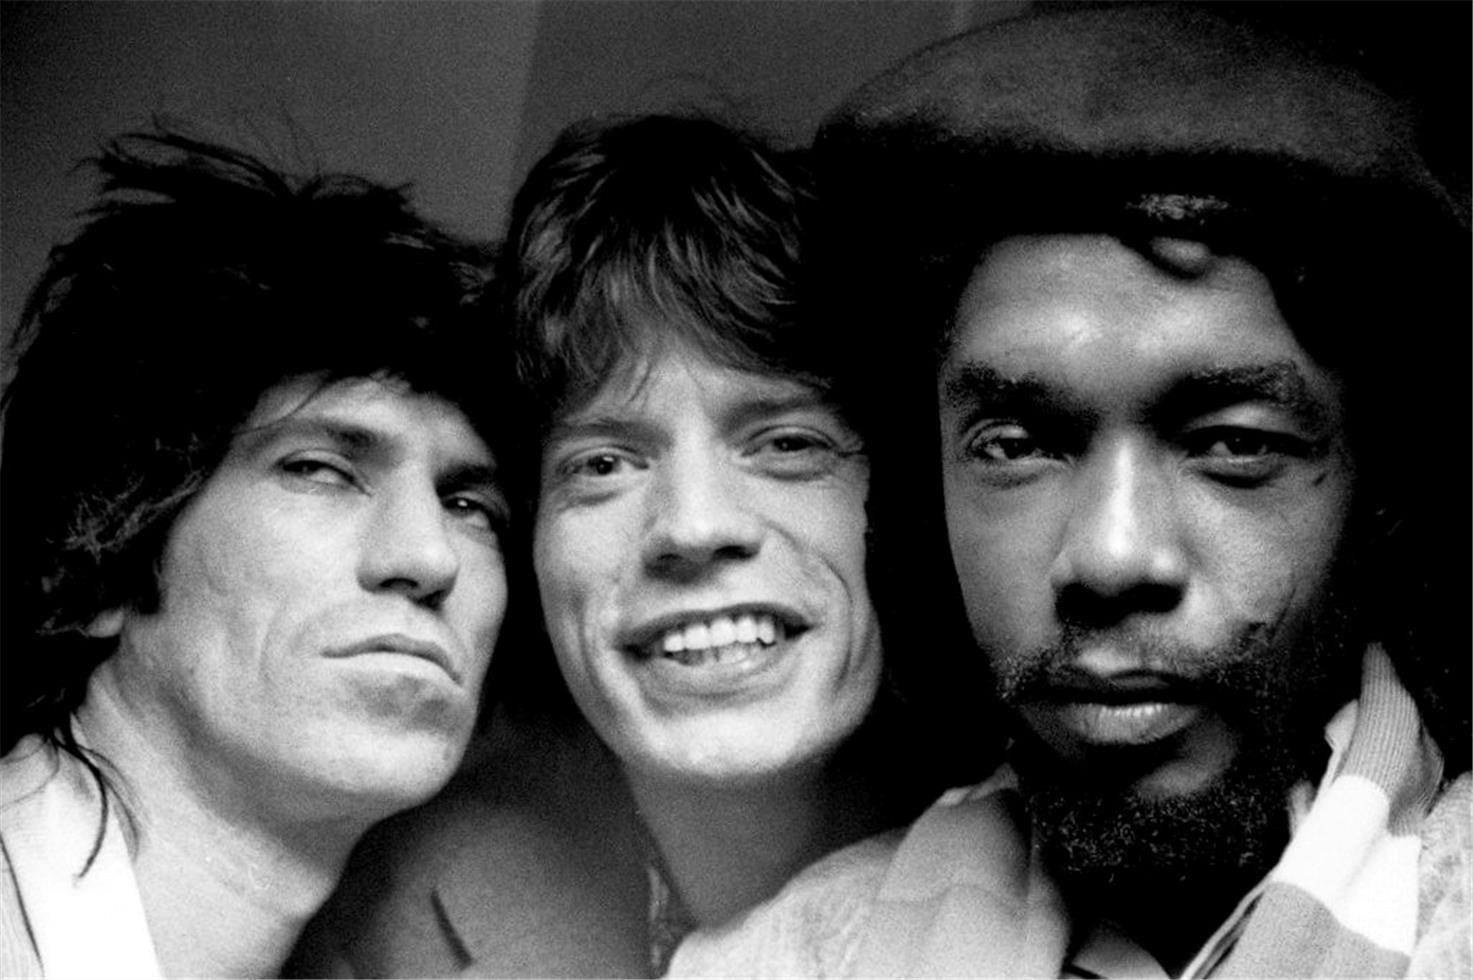 Peter Simon Portrait Photograph - Keith Richards, Mick Jagger, and Peter Tosh, 1978